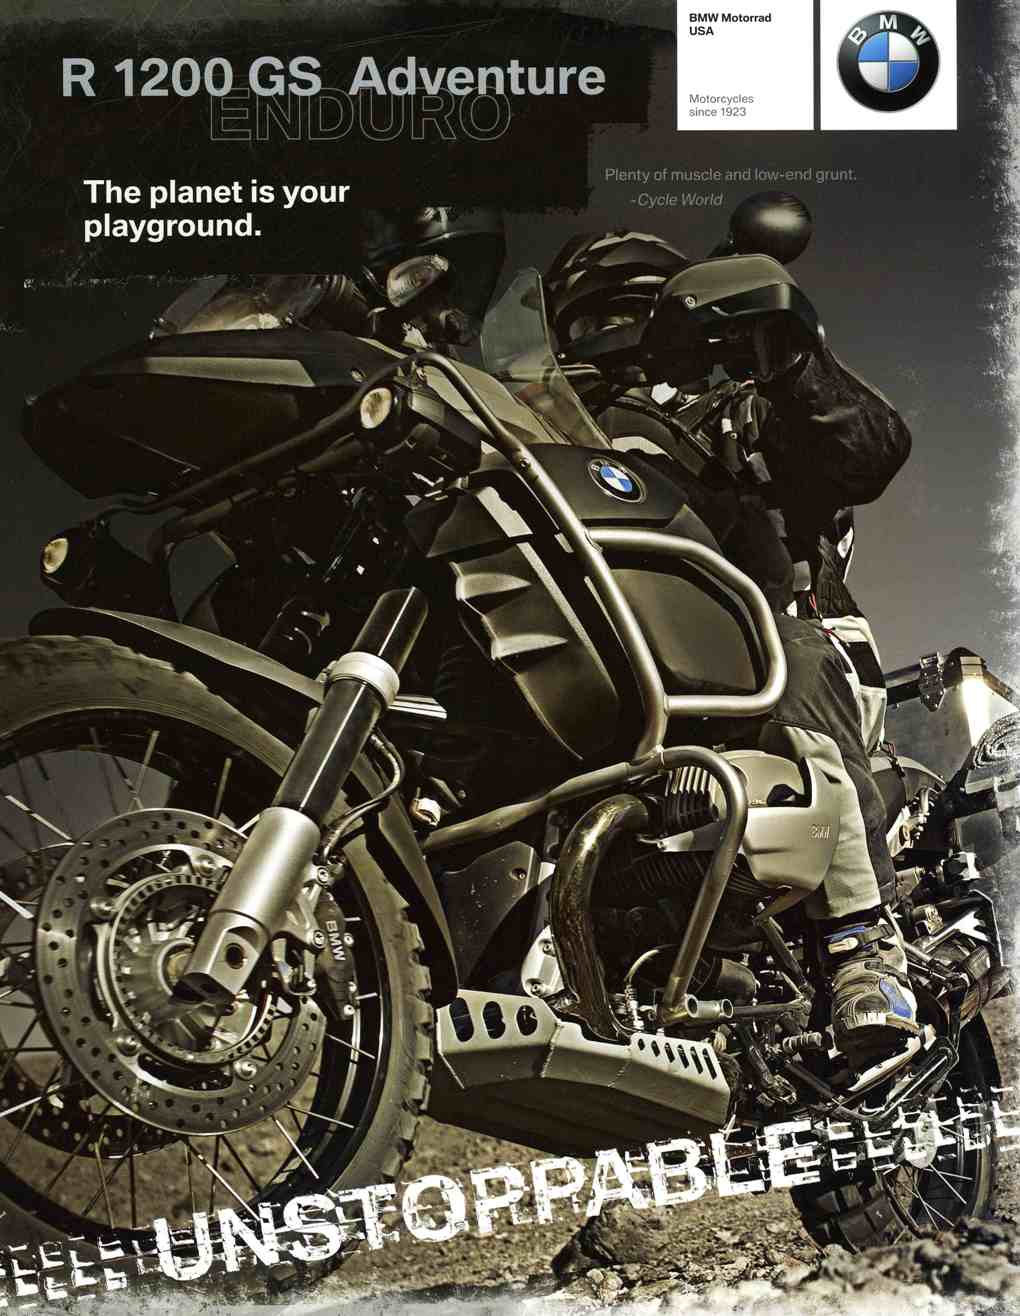 Brochure - BMW Motorrad USA Motorcycles since 1923 - 2009 R1200GS Adventure Brochure